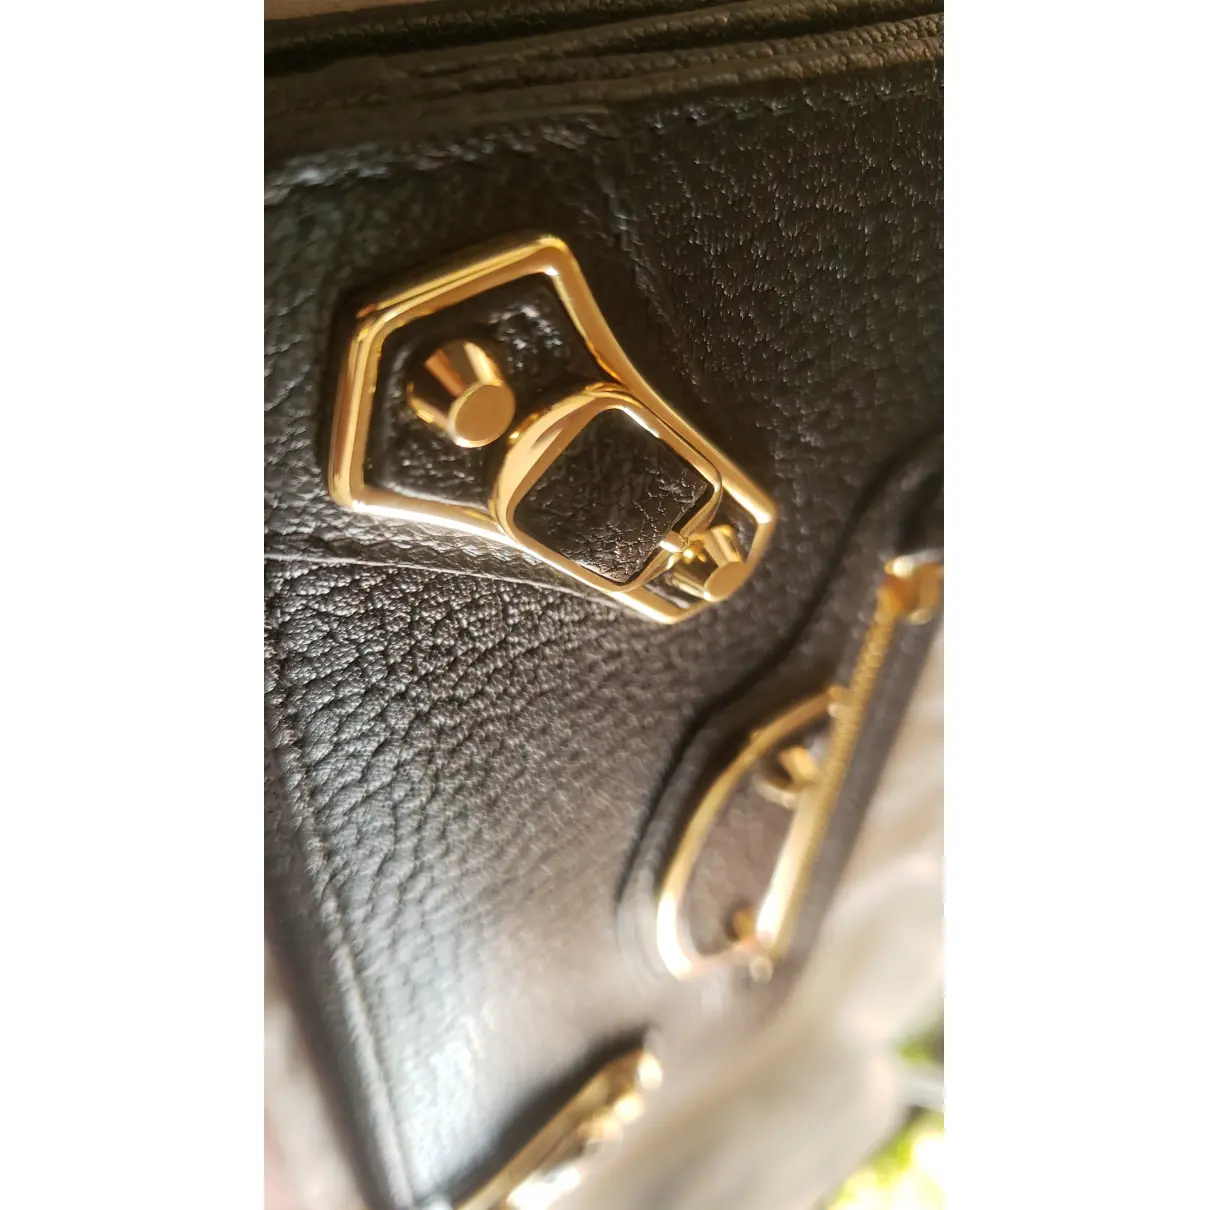 Patent leather purse Balenciaga